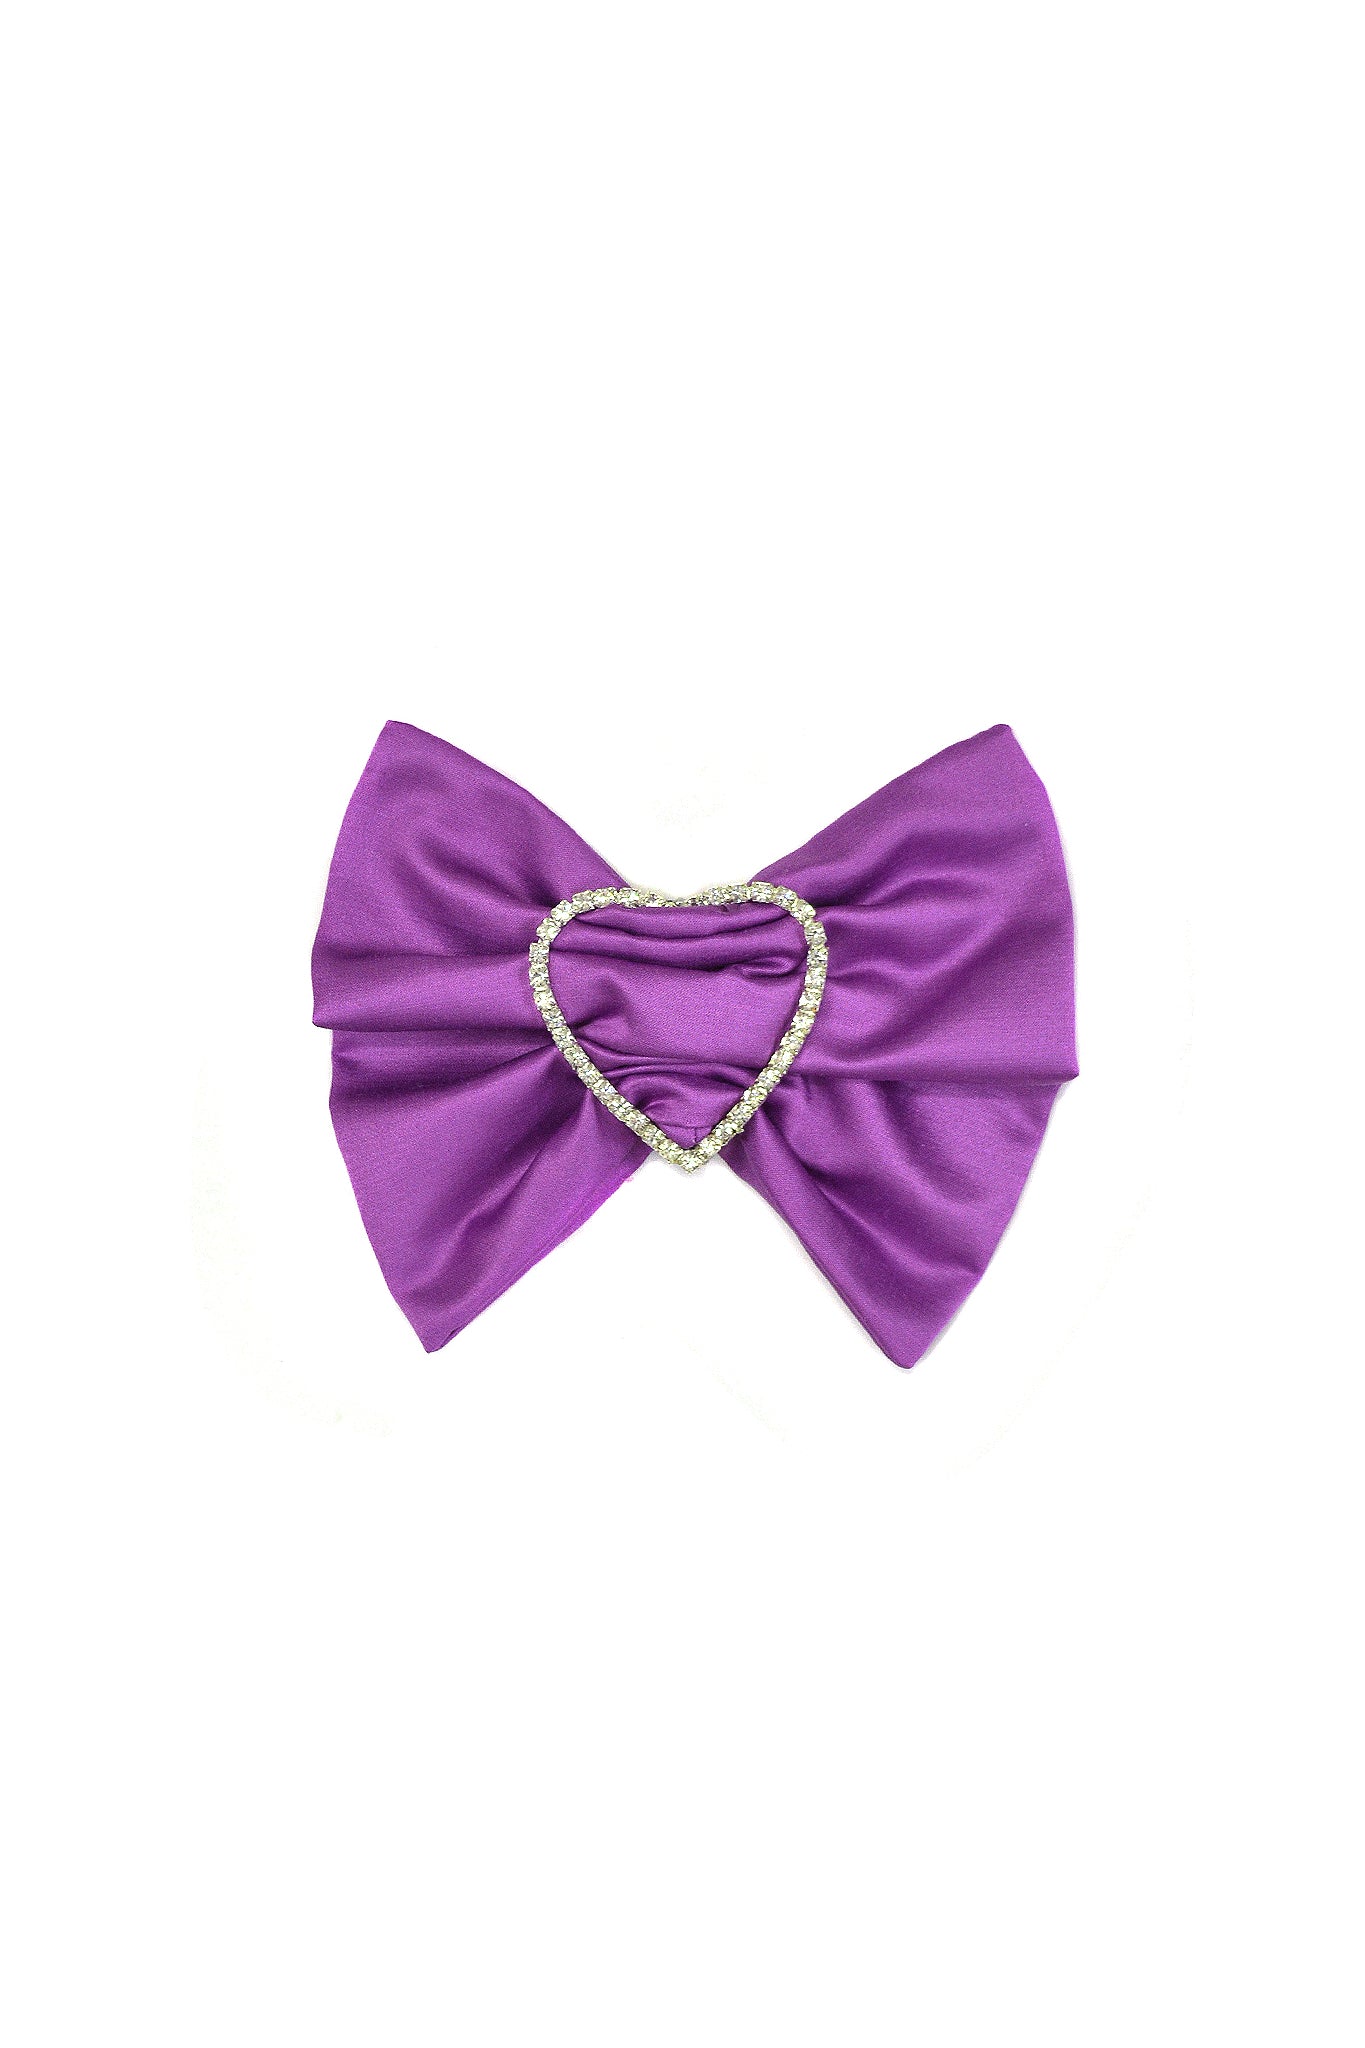 Merrfer Hair Bow, Bright Purple